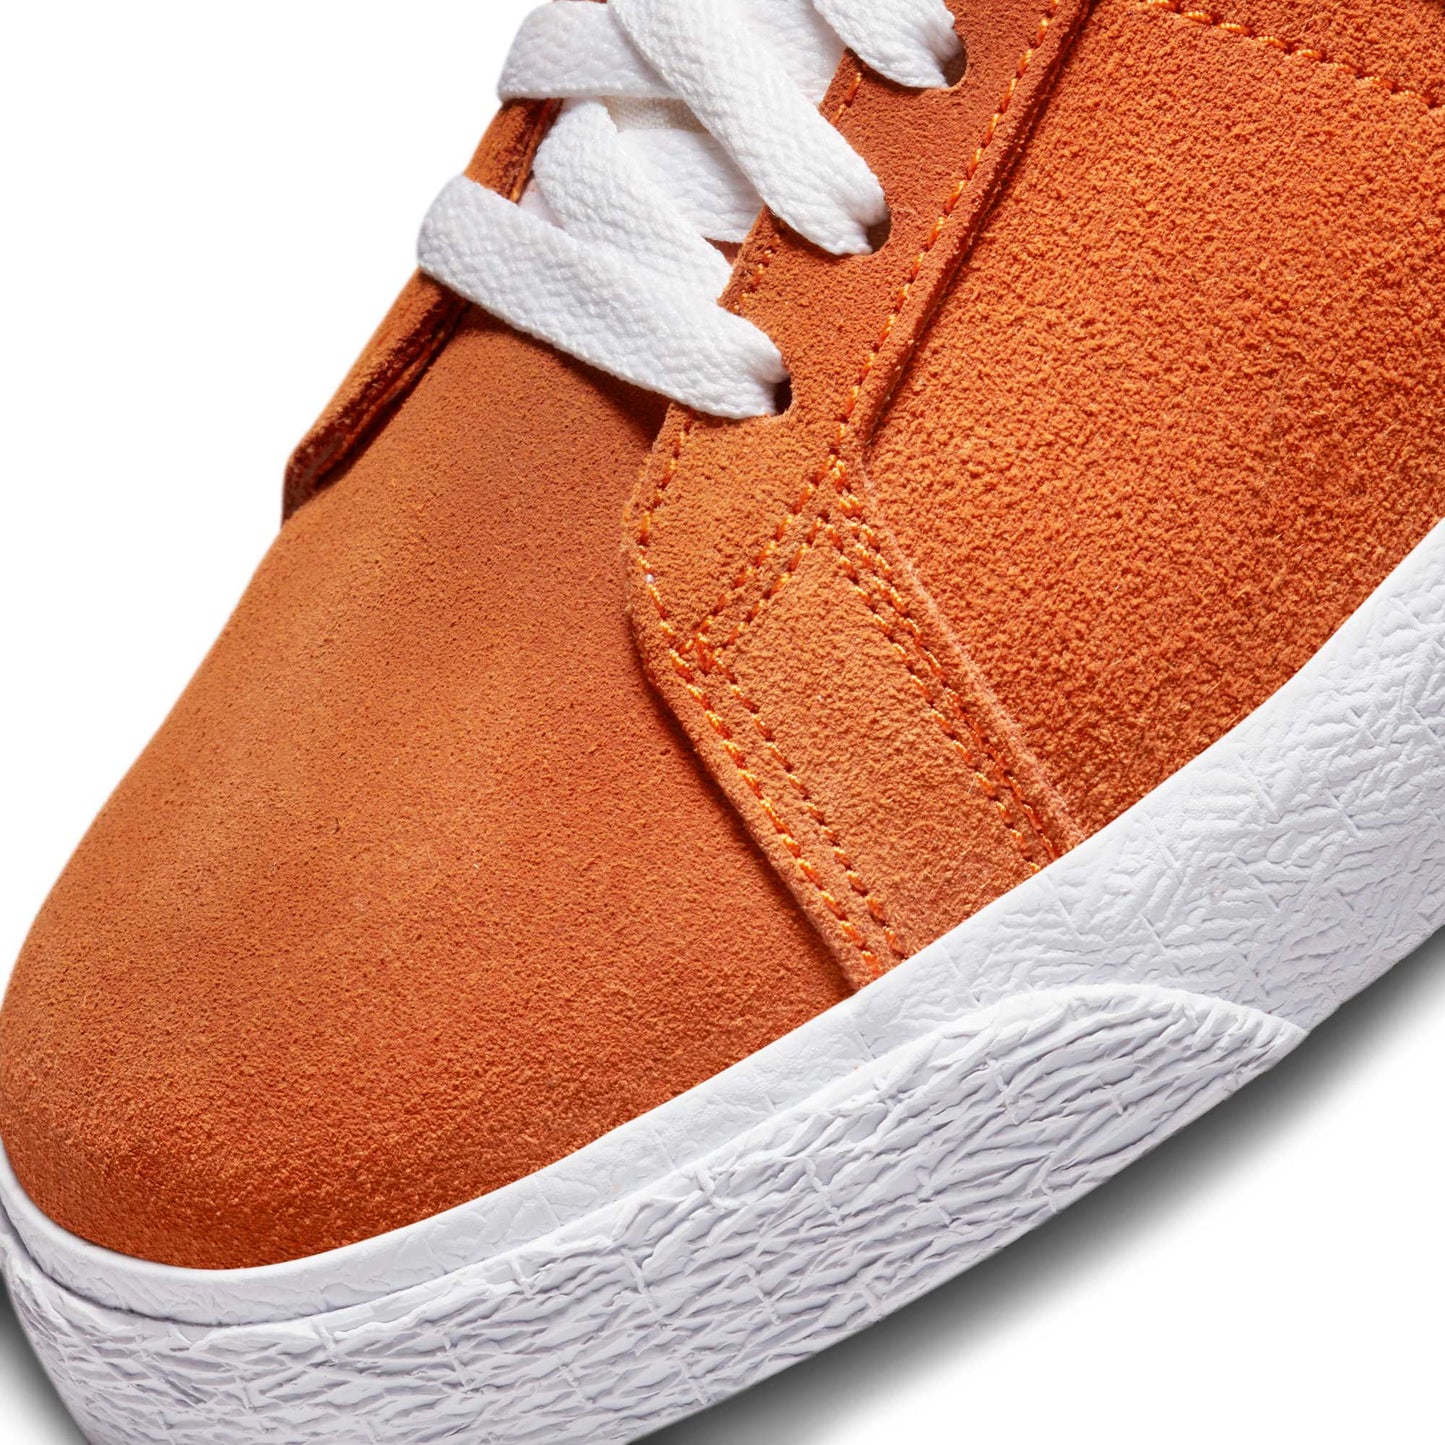 Nike SB Zoom Blazer Mid, safety orange/white-safety orange-white - Tiki Room Skateboards - 11